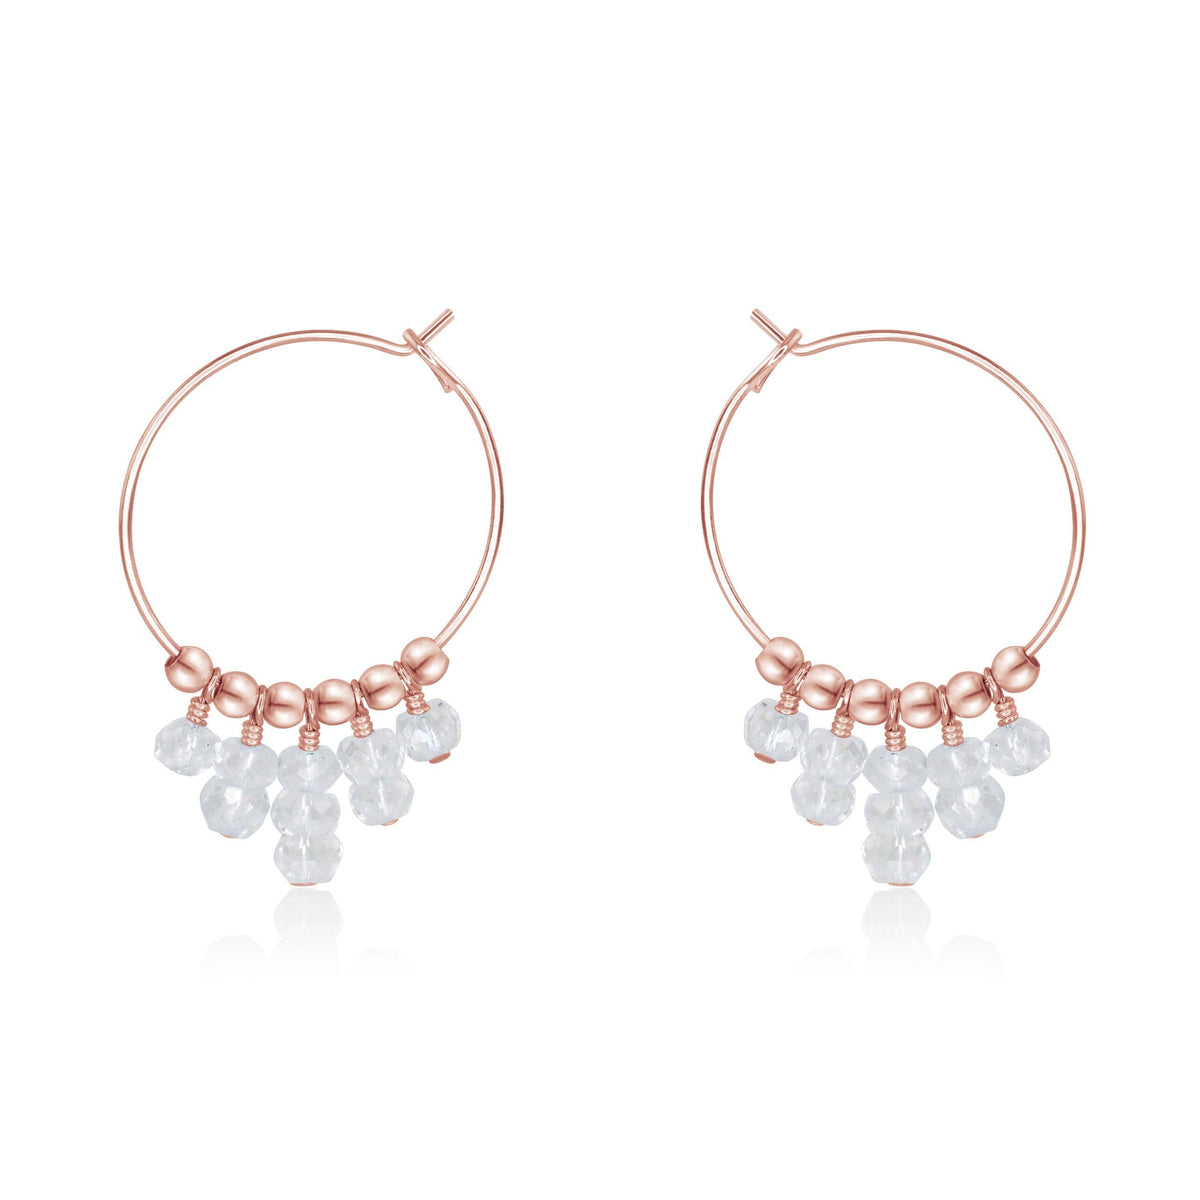 Hoop Earrings - Crystal Quartz - 14K Rose Gold Fill - Luna Tide Handmade Jewellery